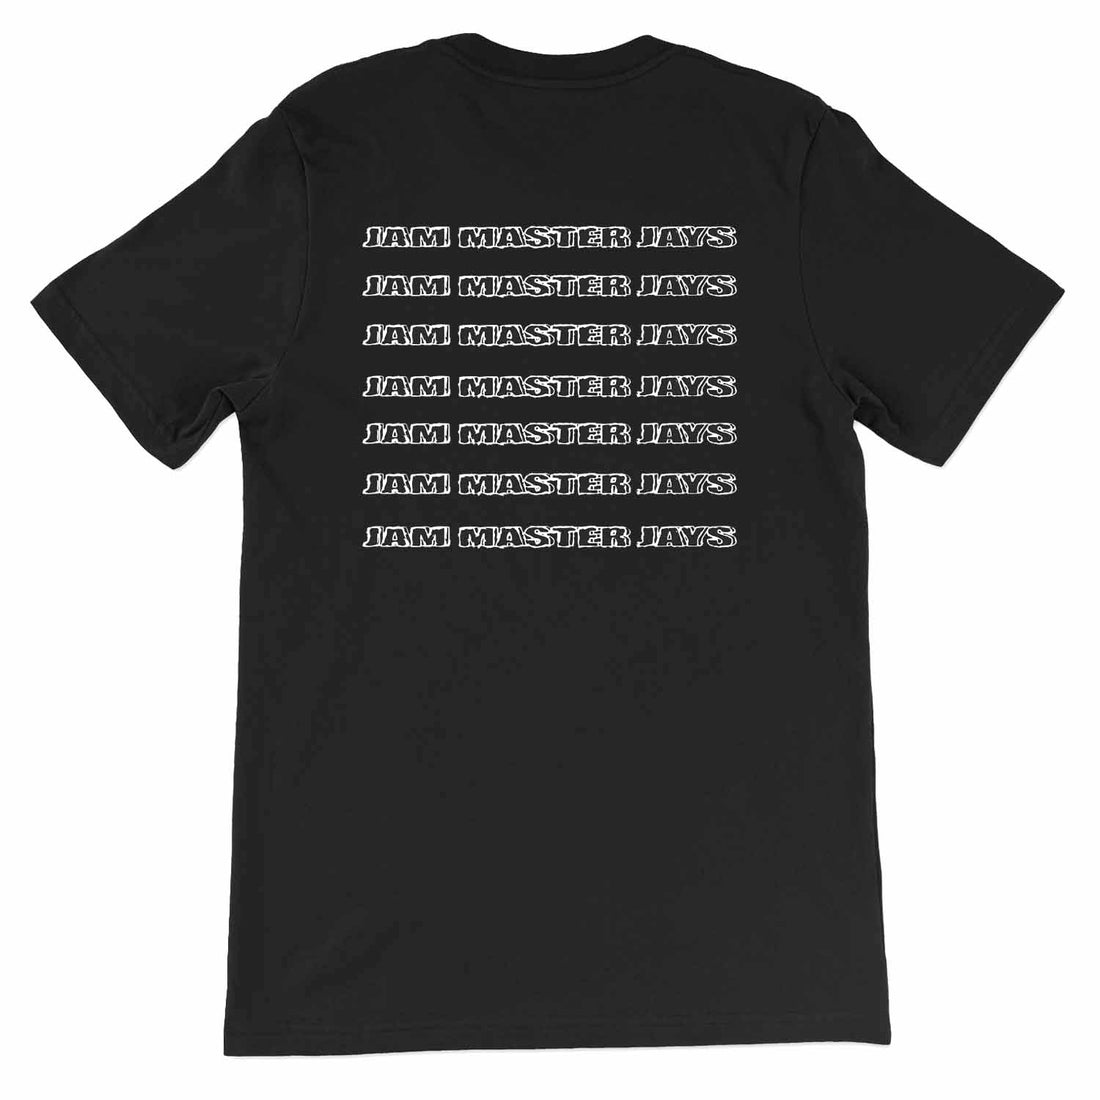 Jam Master Jays Sketch T-Shirt